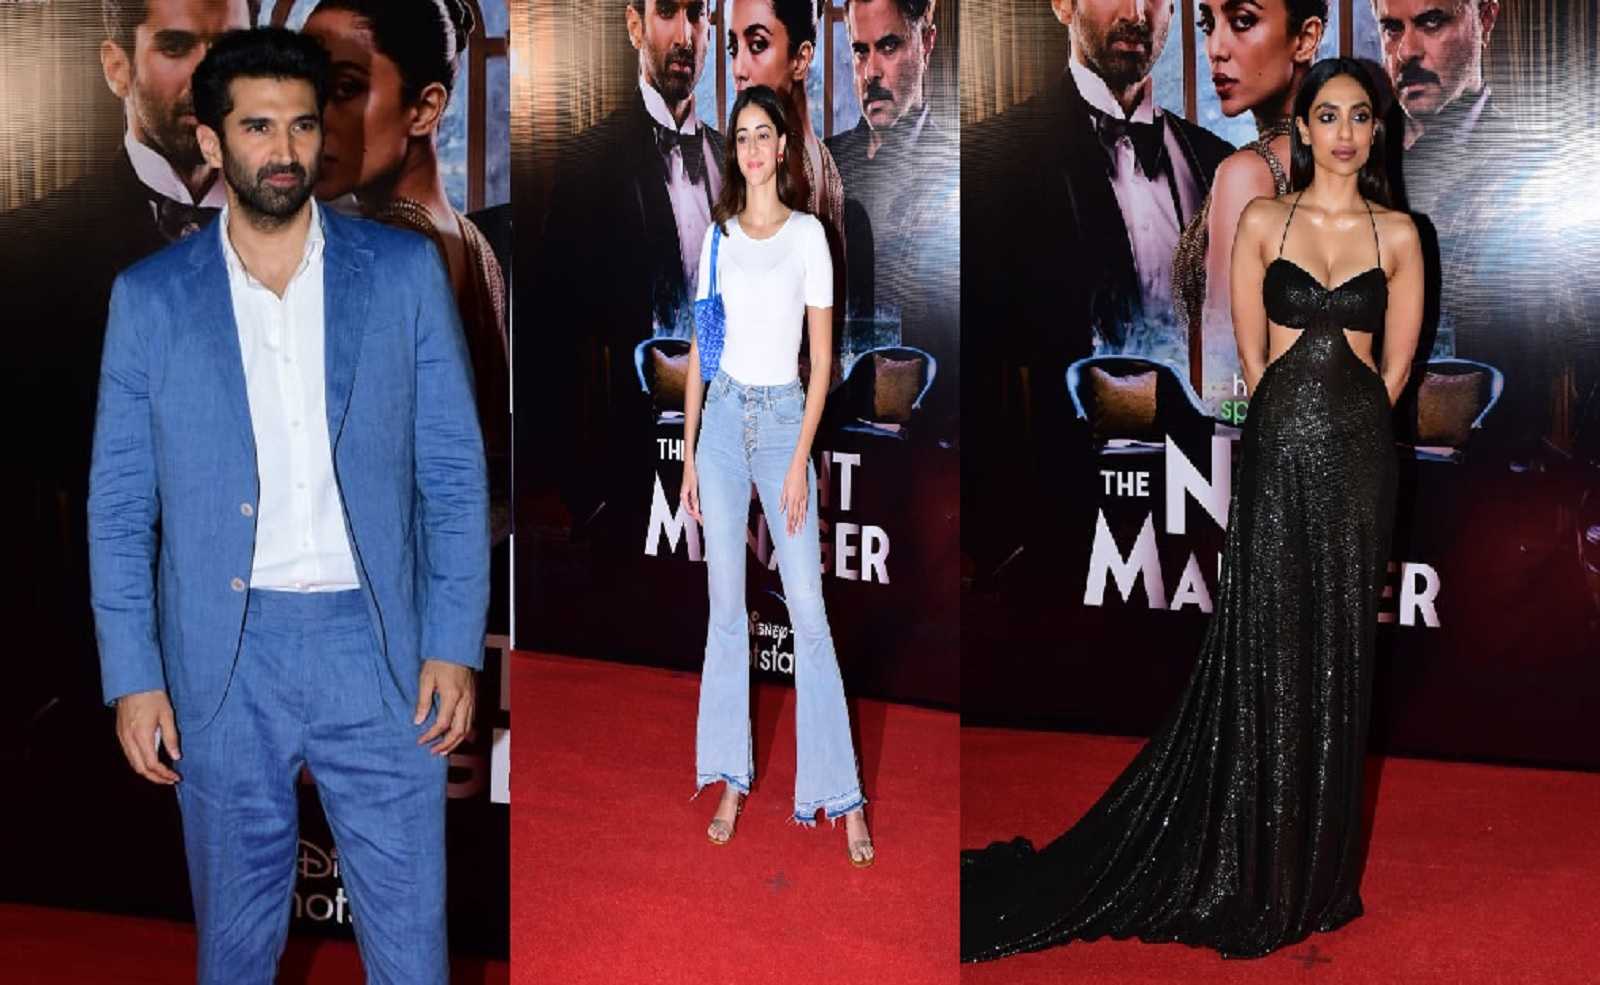 The Night Manager screening: Ananya Panday sparks dating rumors with Aditya Roy Kapur, Sobhita Dhulipala is all glam; see pics